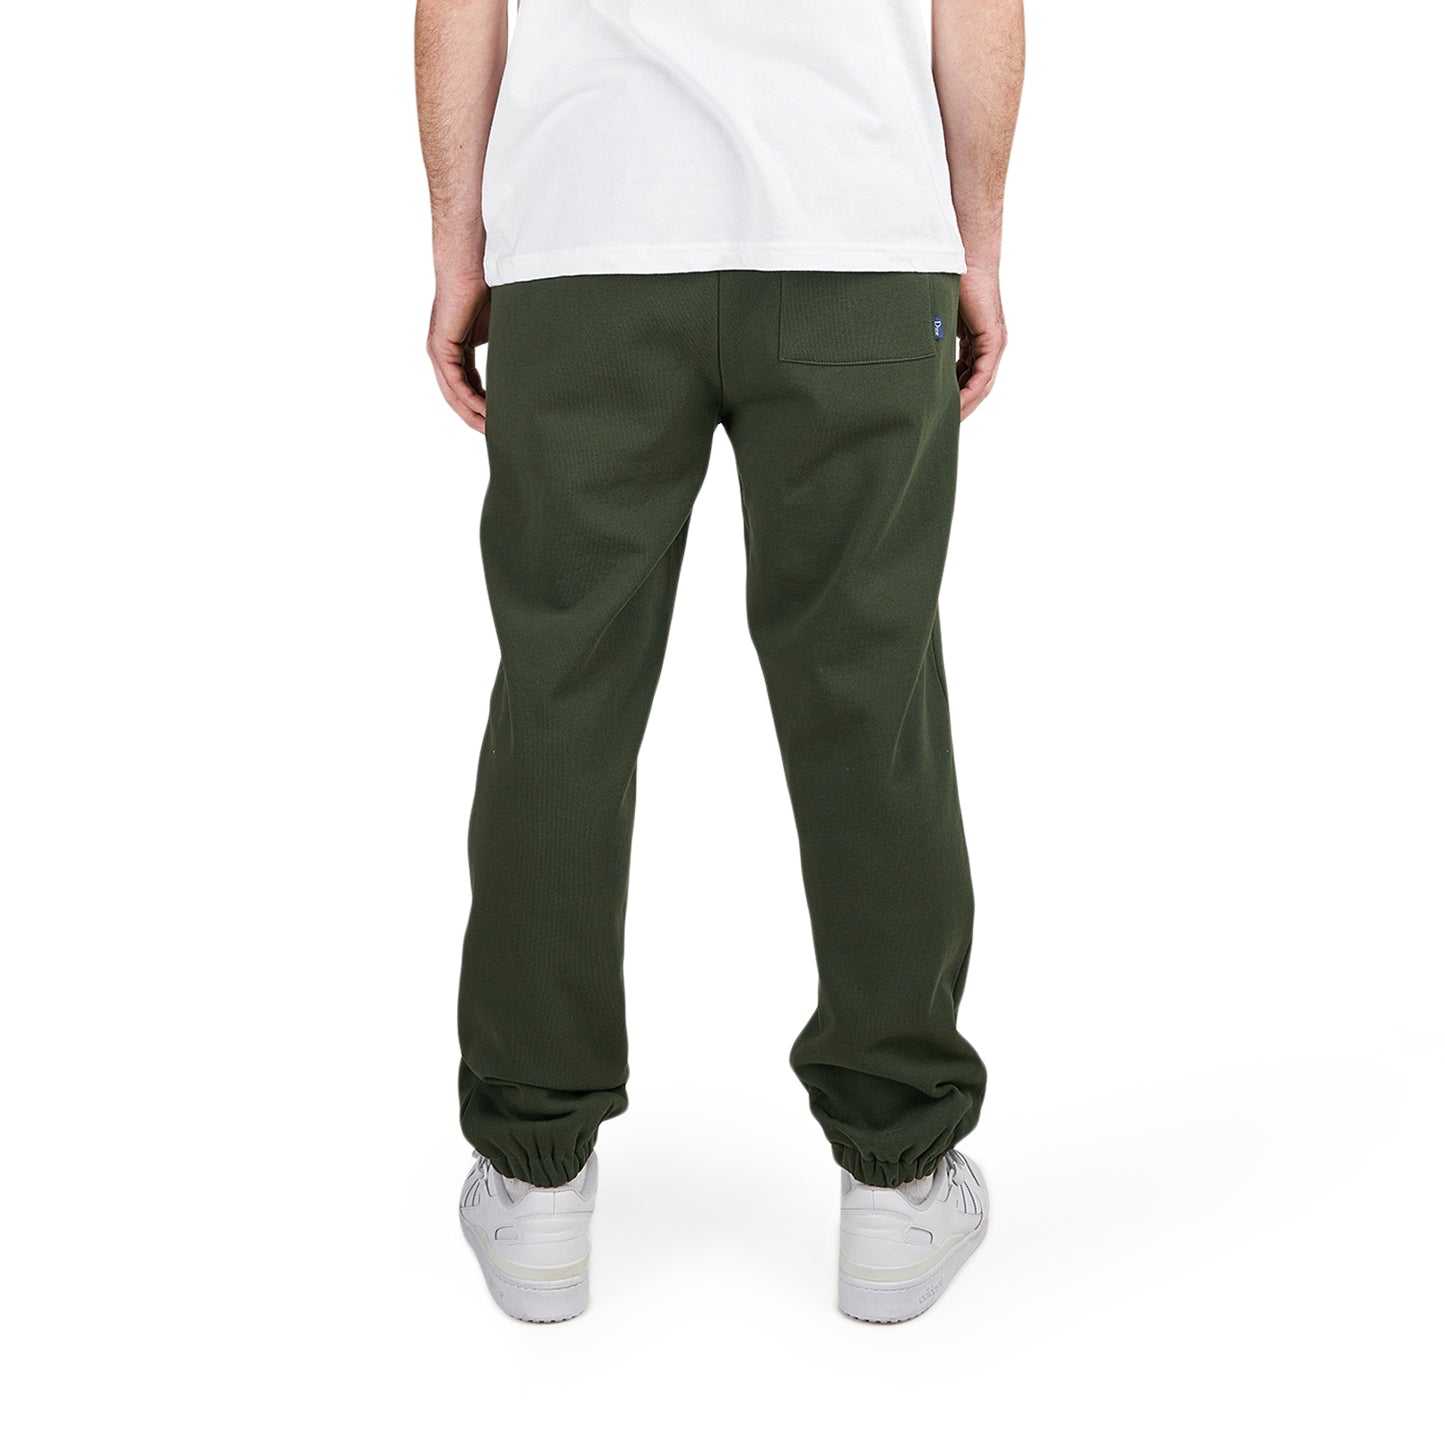 Dime Classic Small Logo Sweatpants (Grün)  - Allike Store